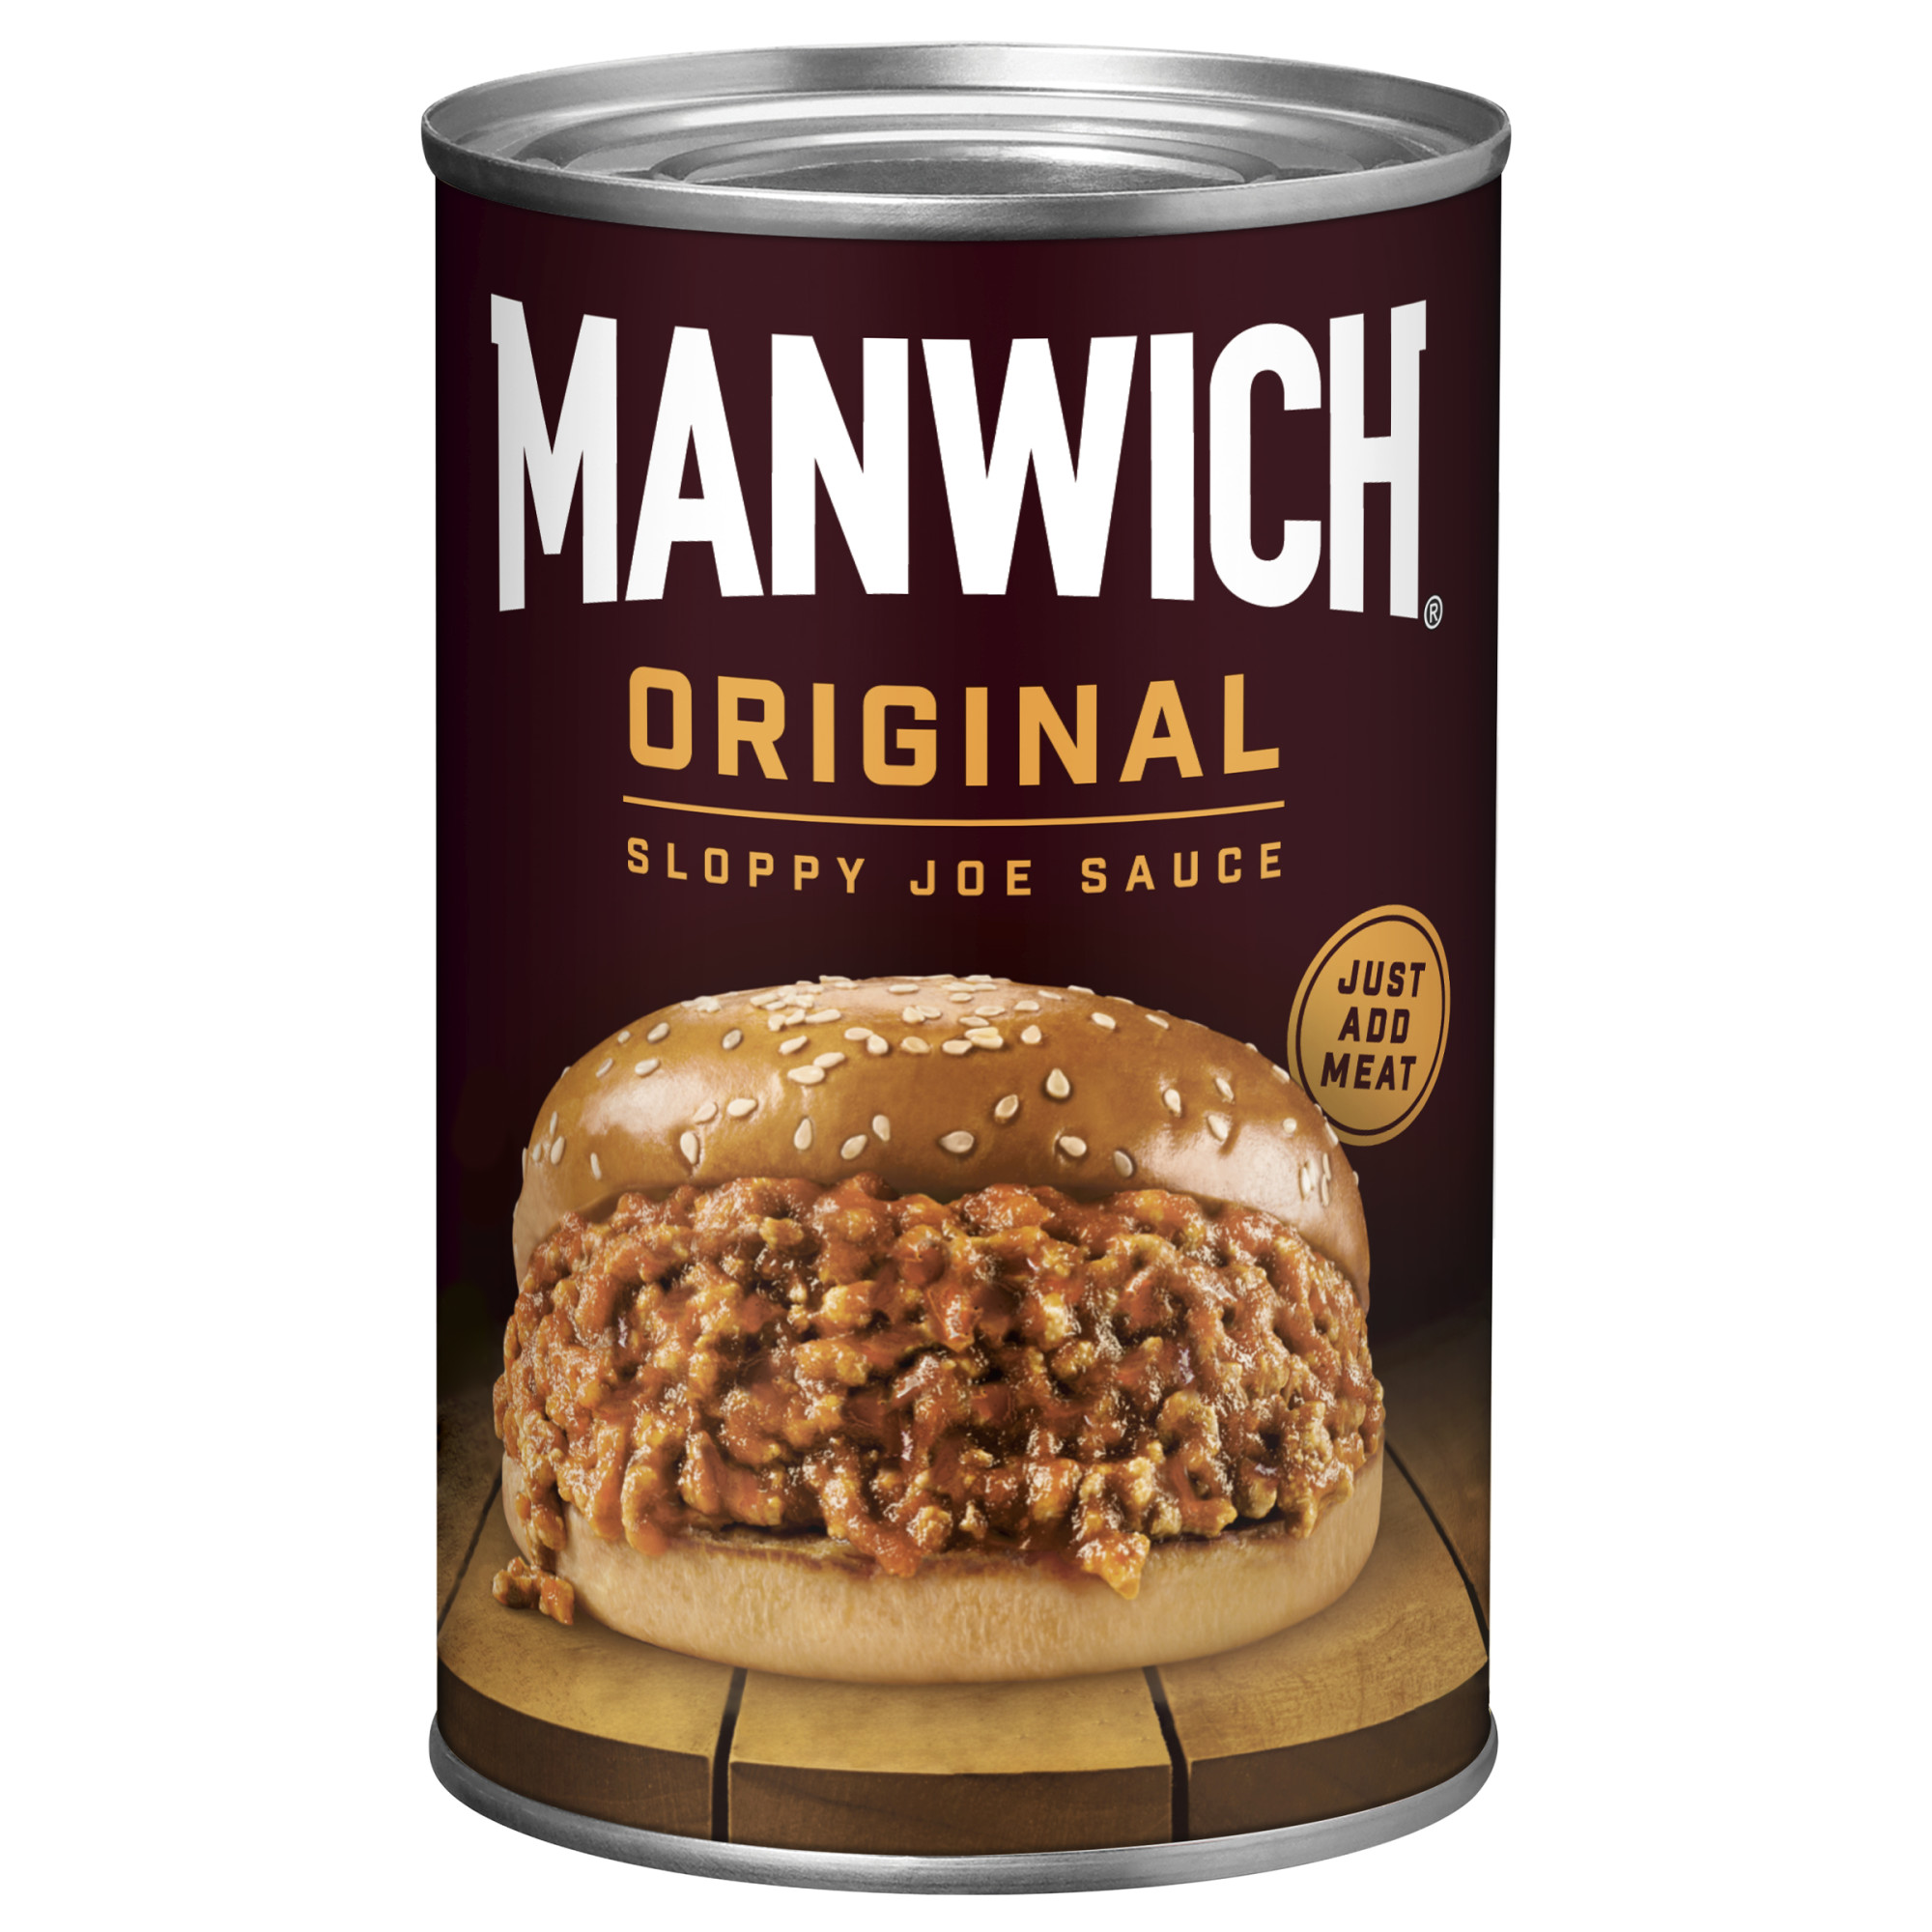 Manwich Original Sloppy Joe Sauce, Canned Sauce, 24 oz. - image 1 of 7